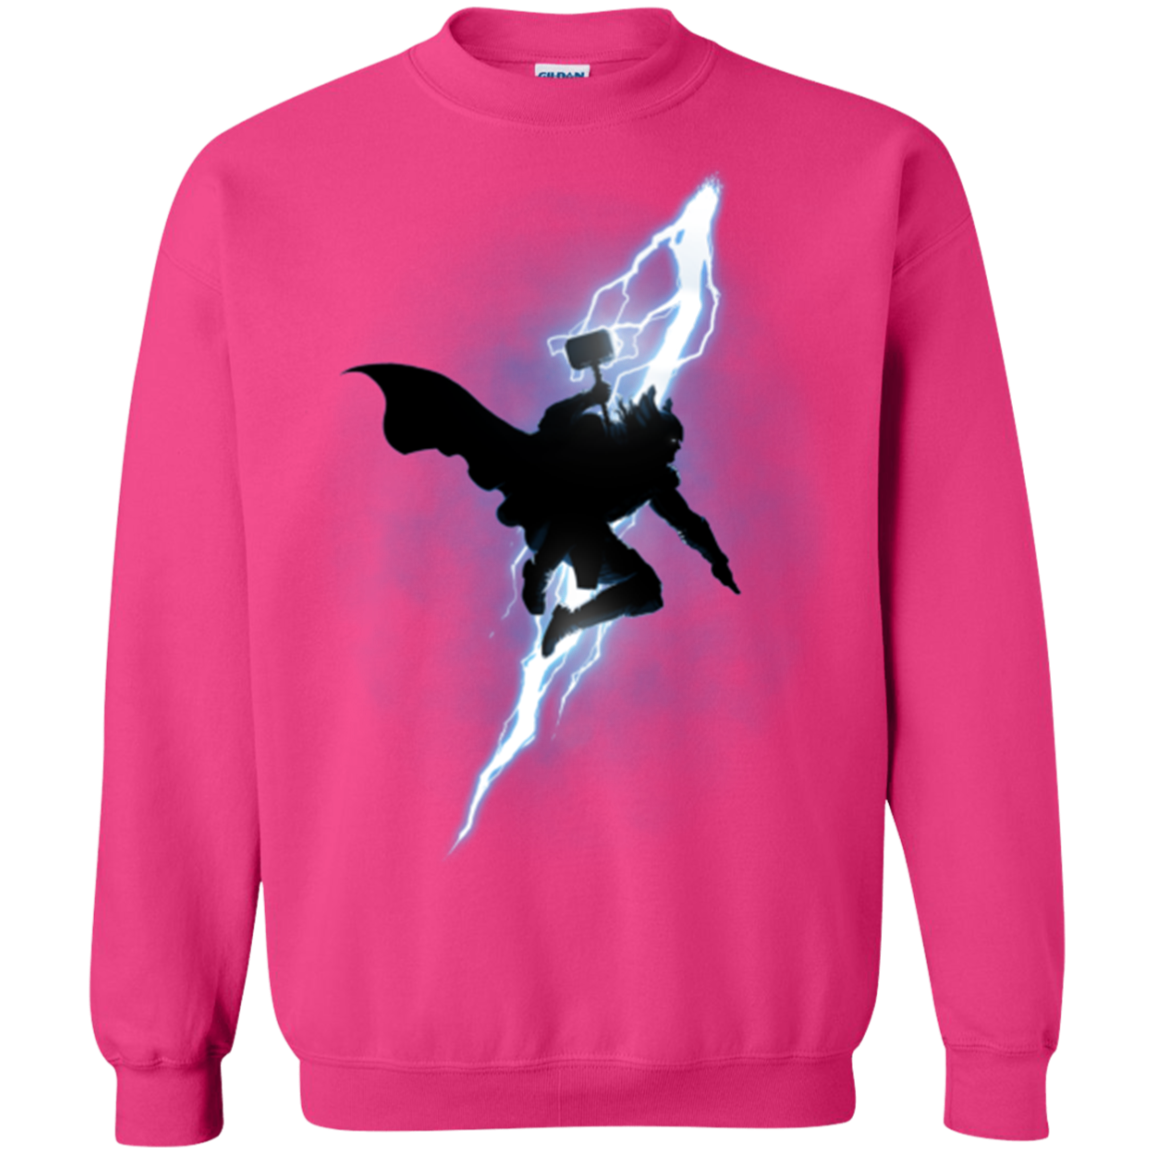 The Thunder God Returns Crewneck Sweatshirt